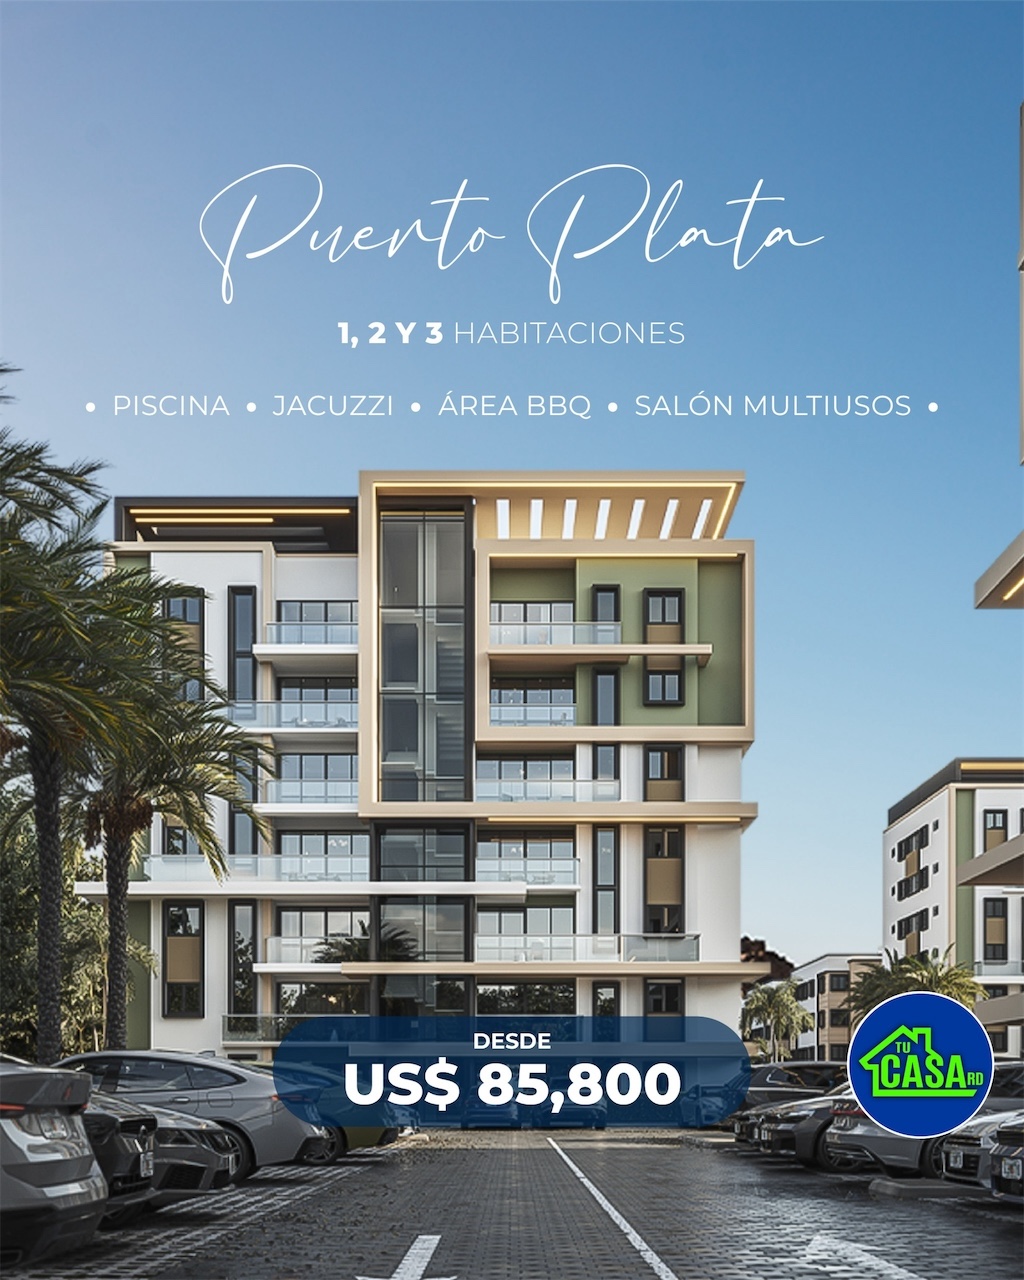 apartamentos - Apartamentos en planos con ascensor frente a playa dorada, Puerto Plata 🤩🔝 1